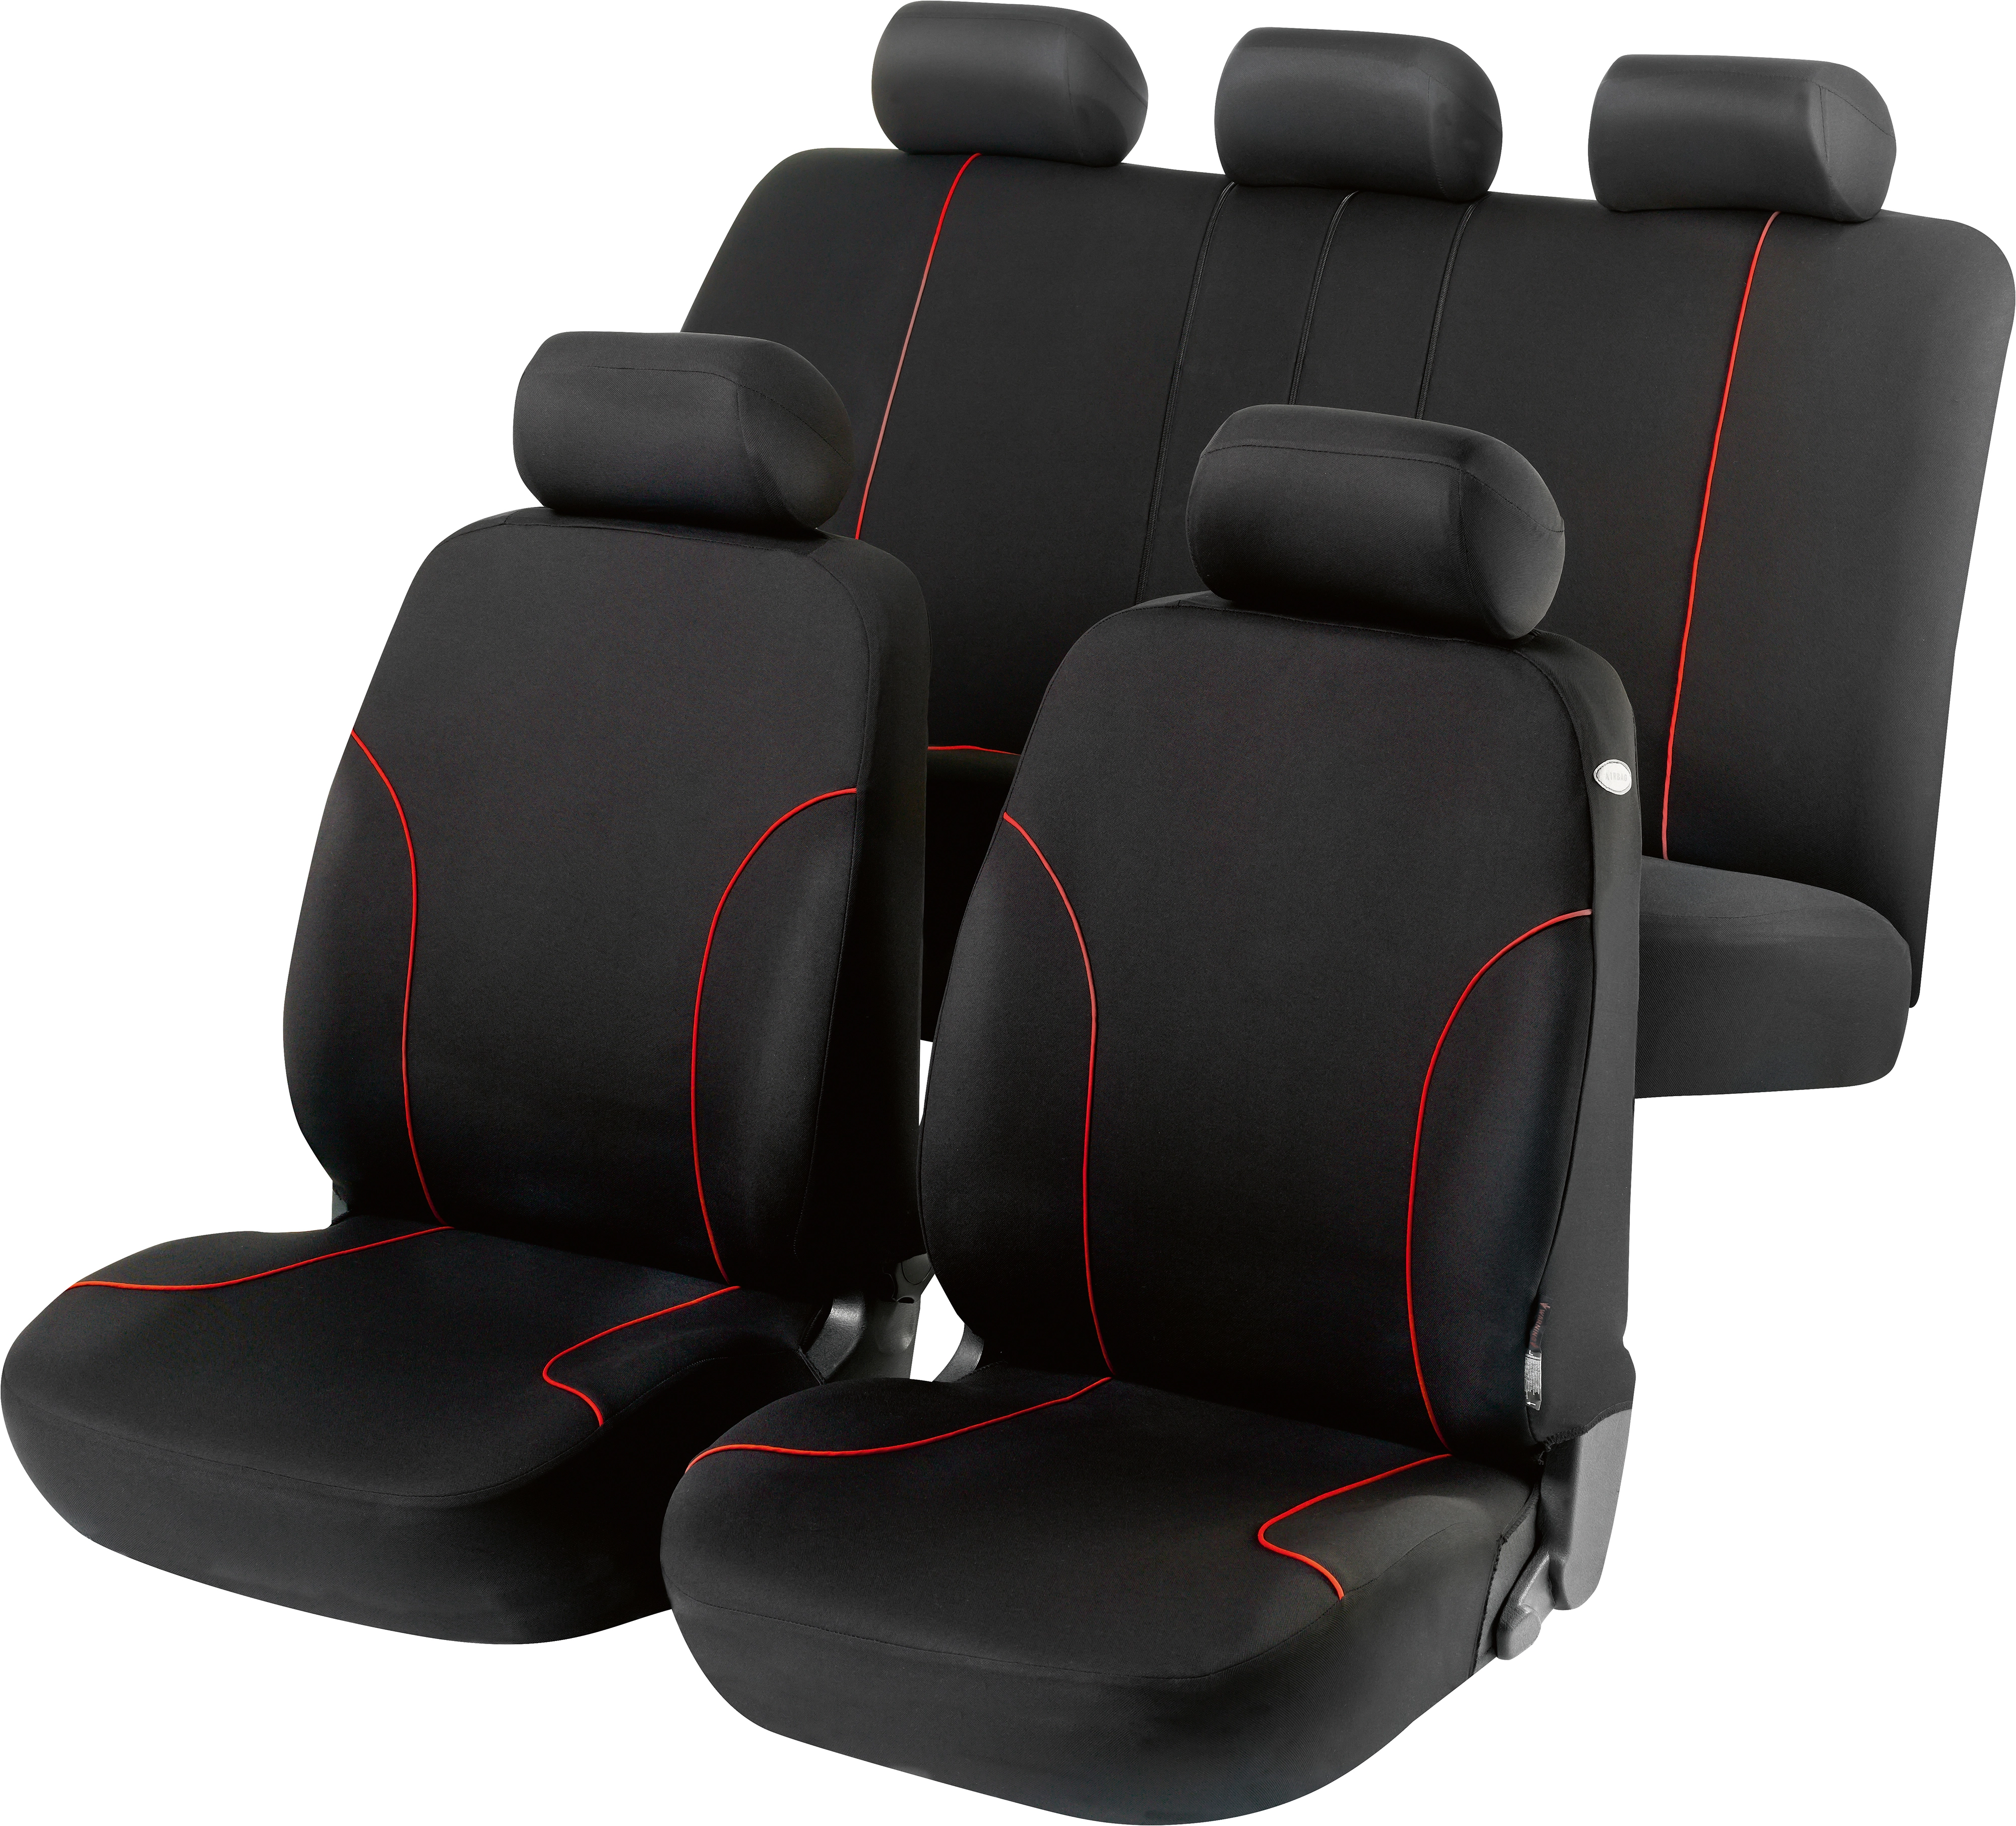 OBI Sitzbezug Komplett-Set Curve Schwarz-Rot kaufen bei OBI